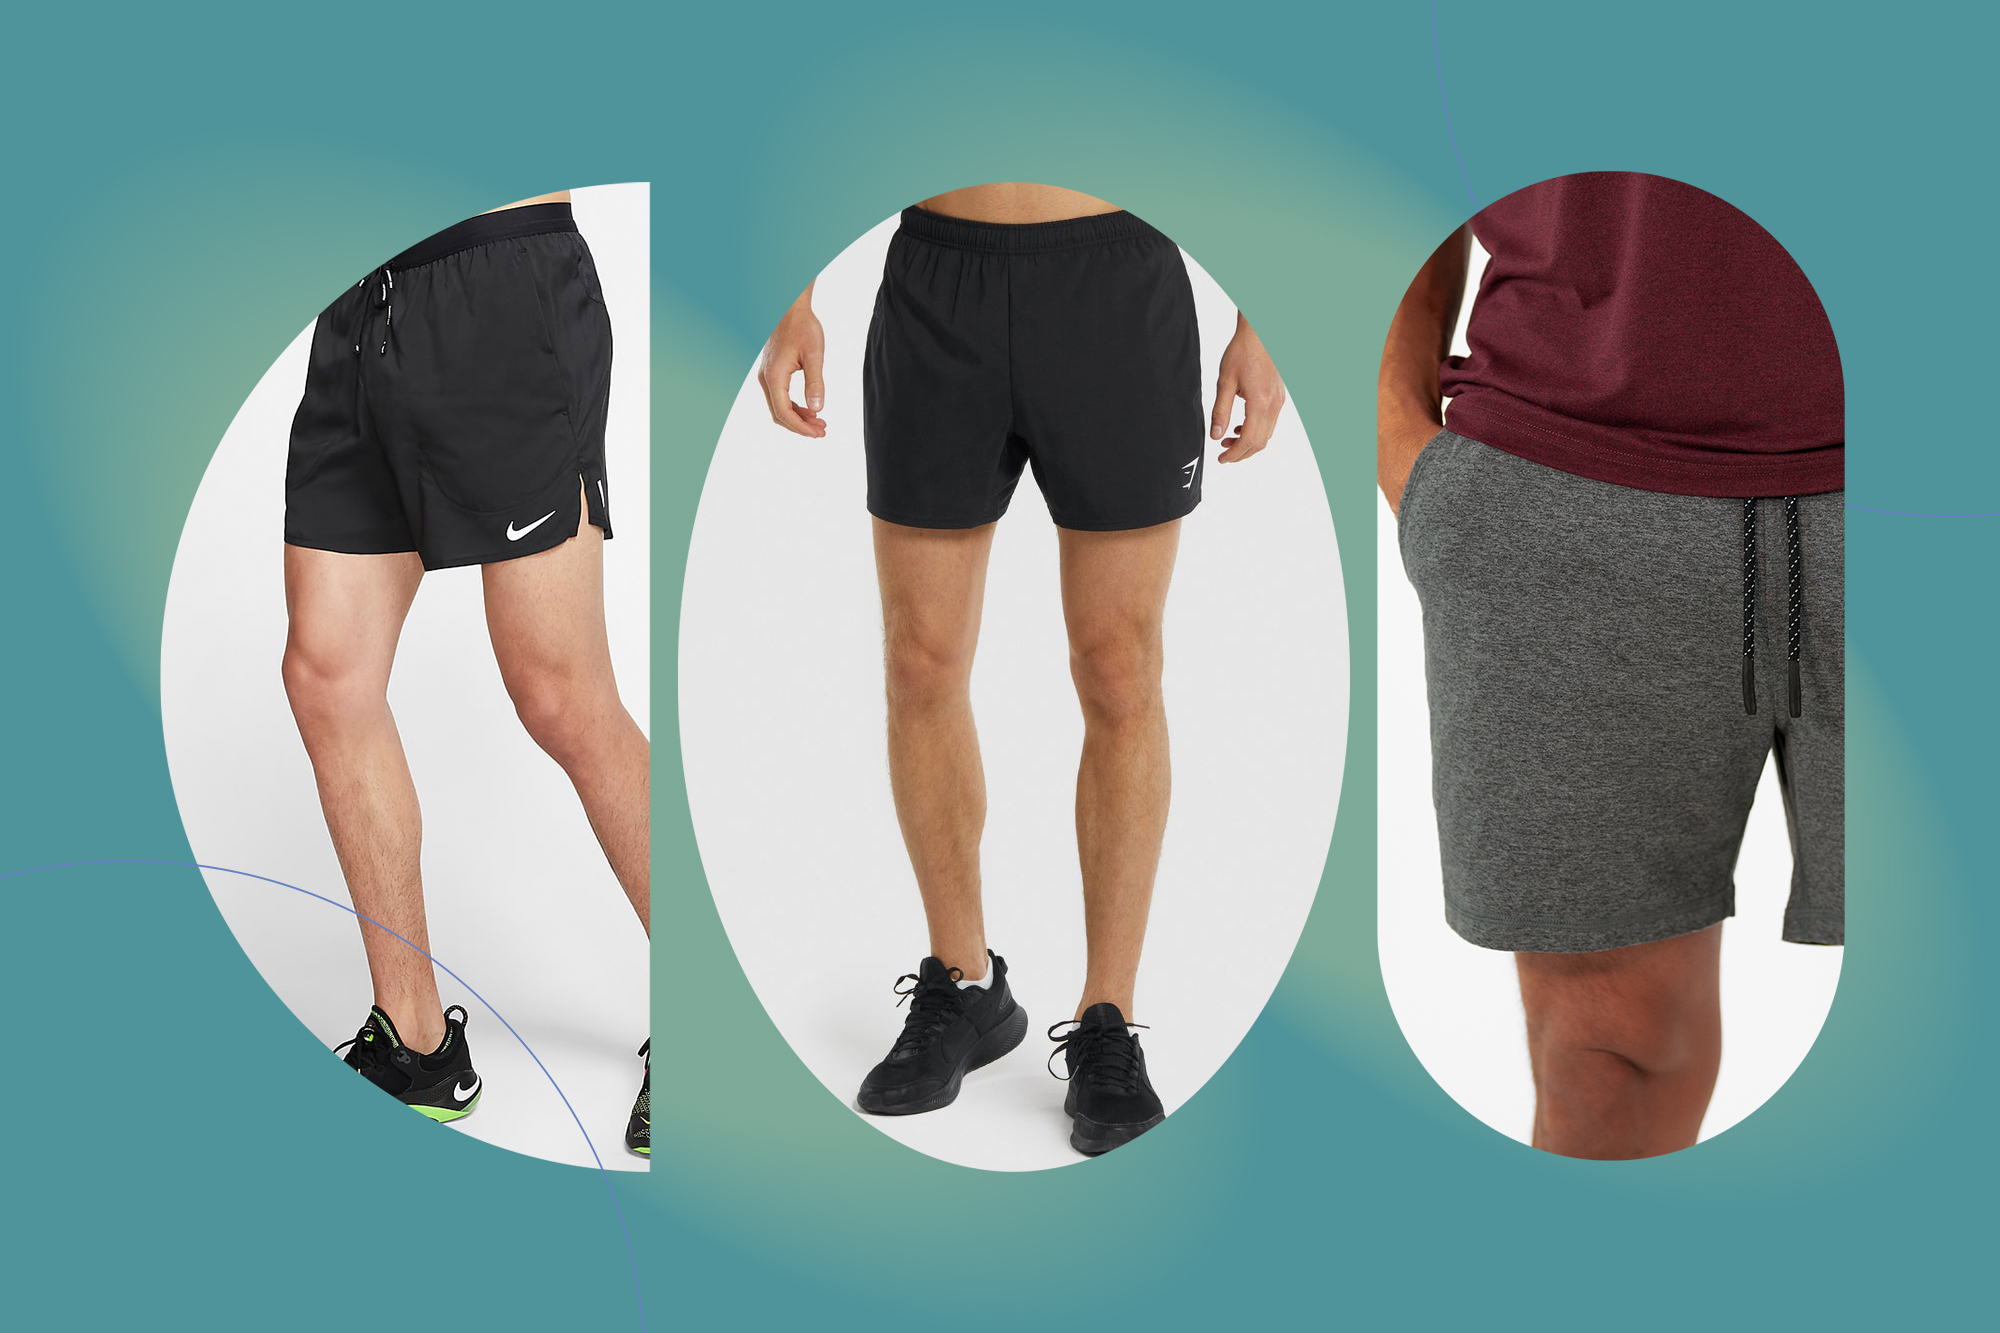 Gymshark Arrival 5 Shorts - Black  Running shorts outfit, Mens pants  fashion, Gymshark